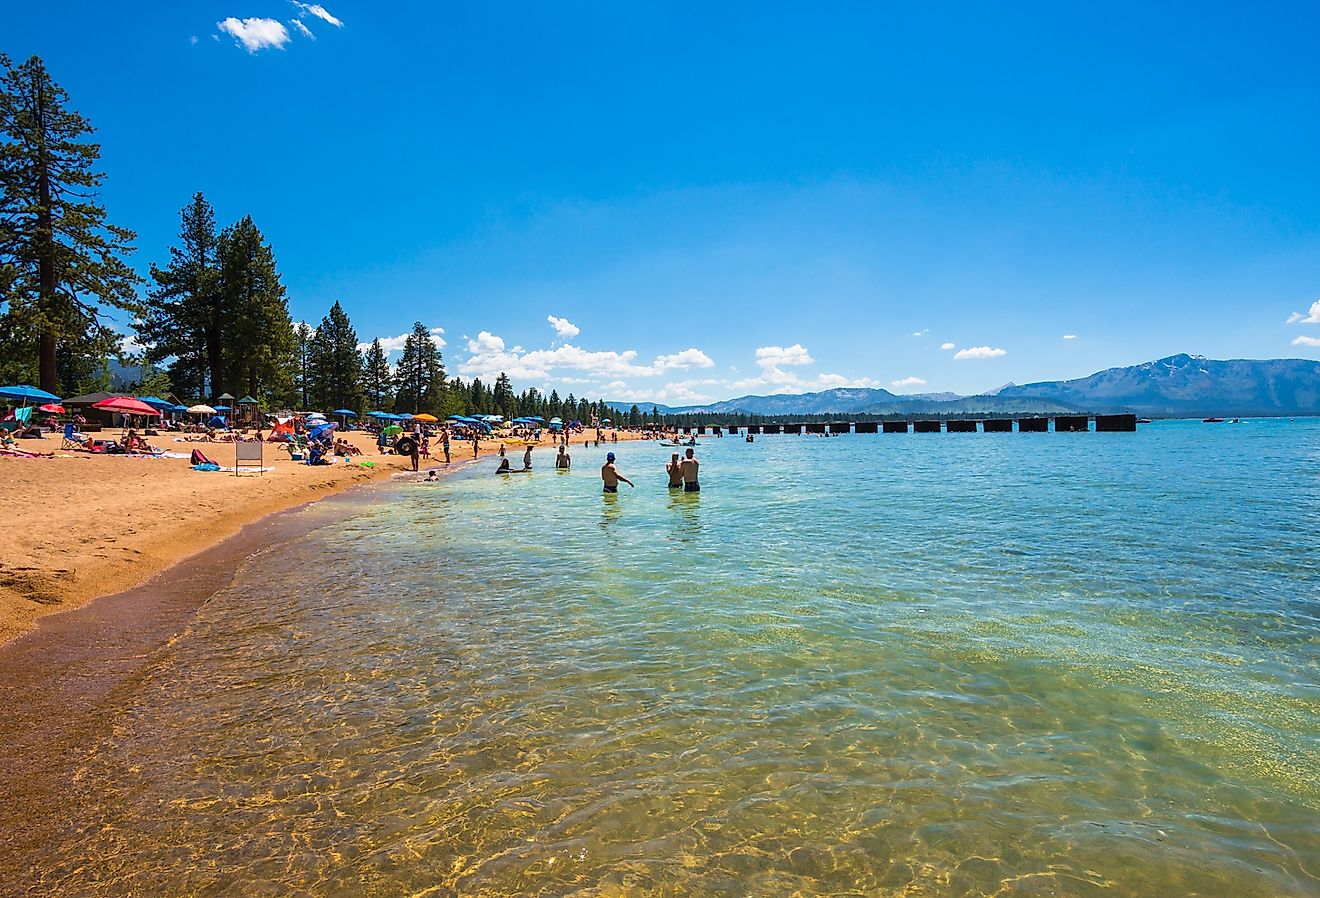 Beach along Lake Tahoe, California. Image credit Asif Islam via Shutterstock